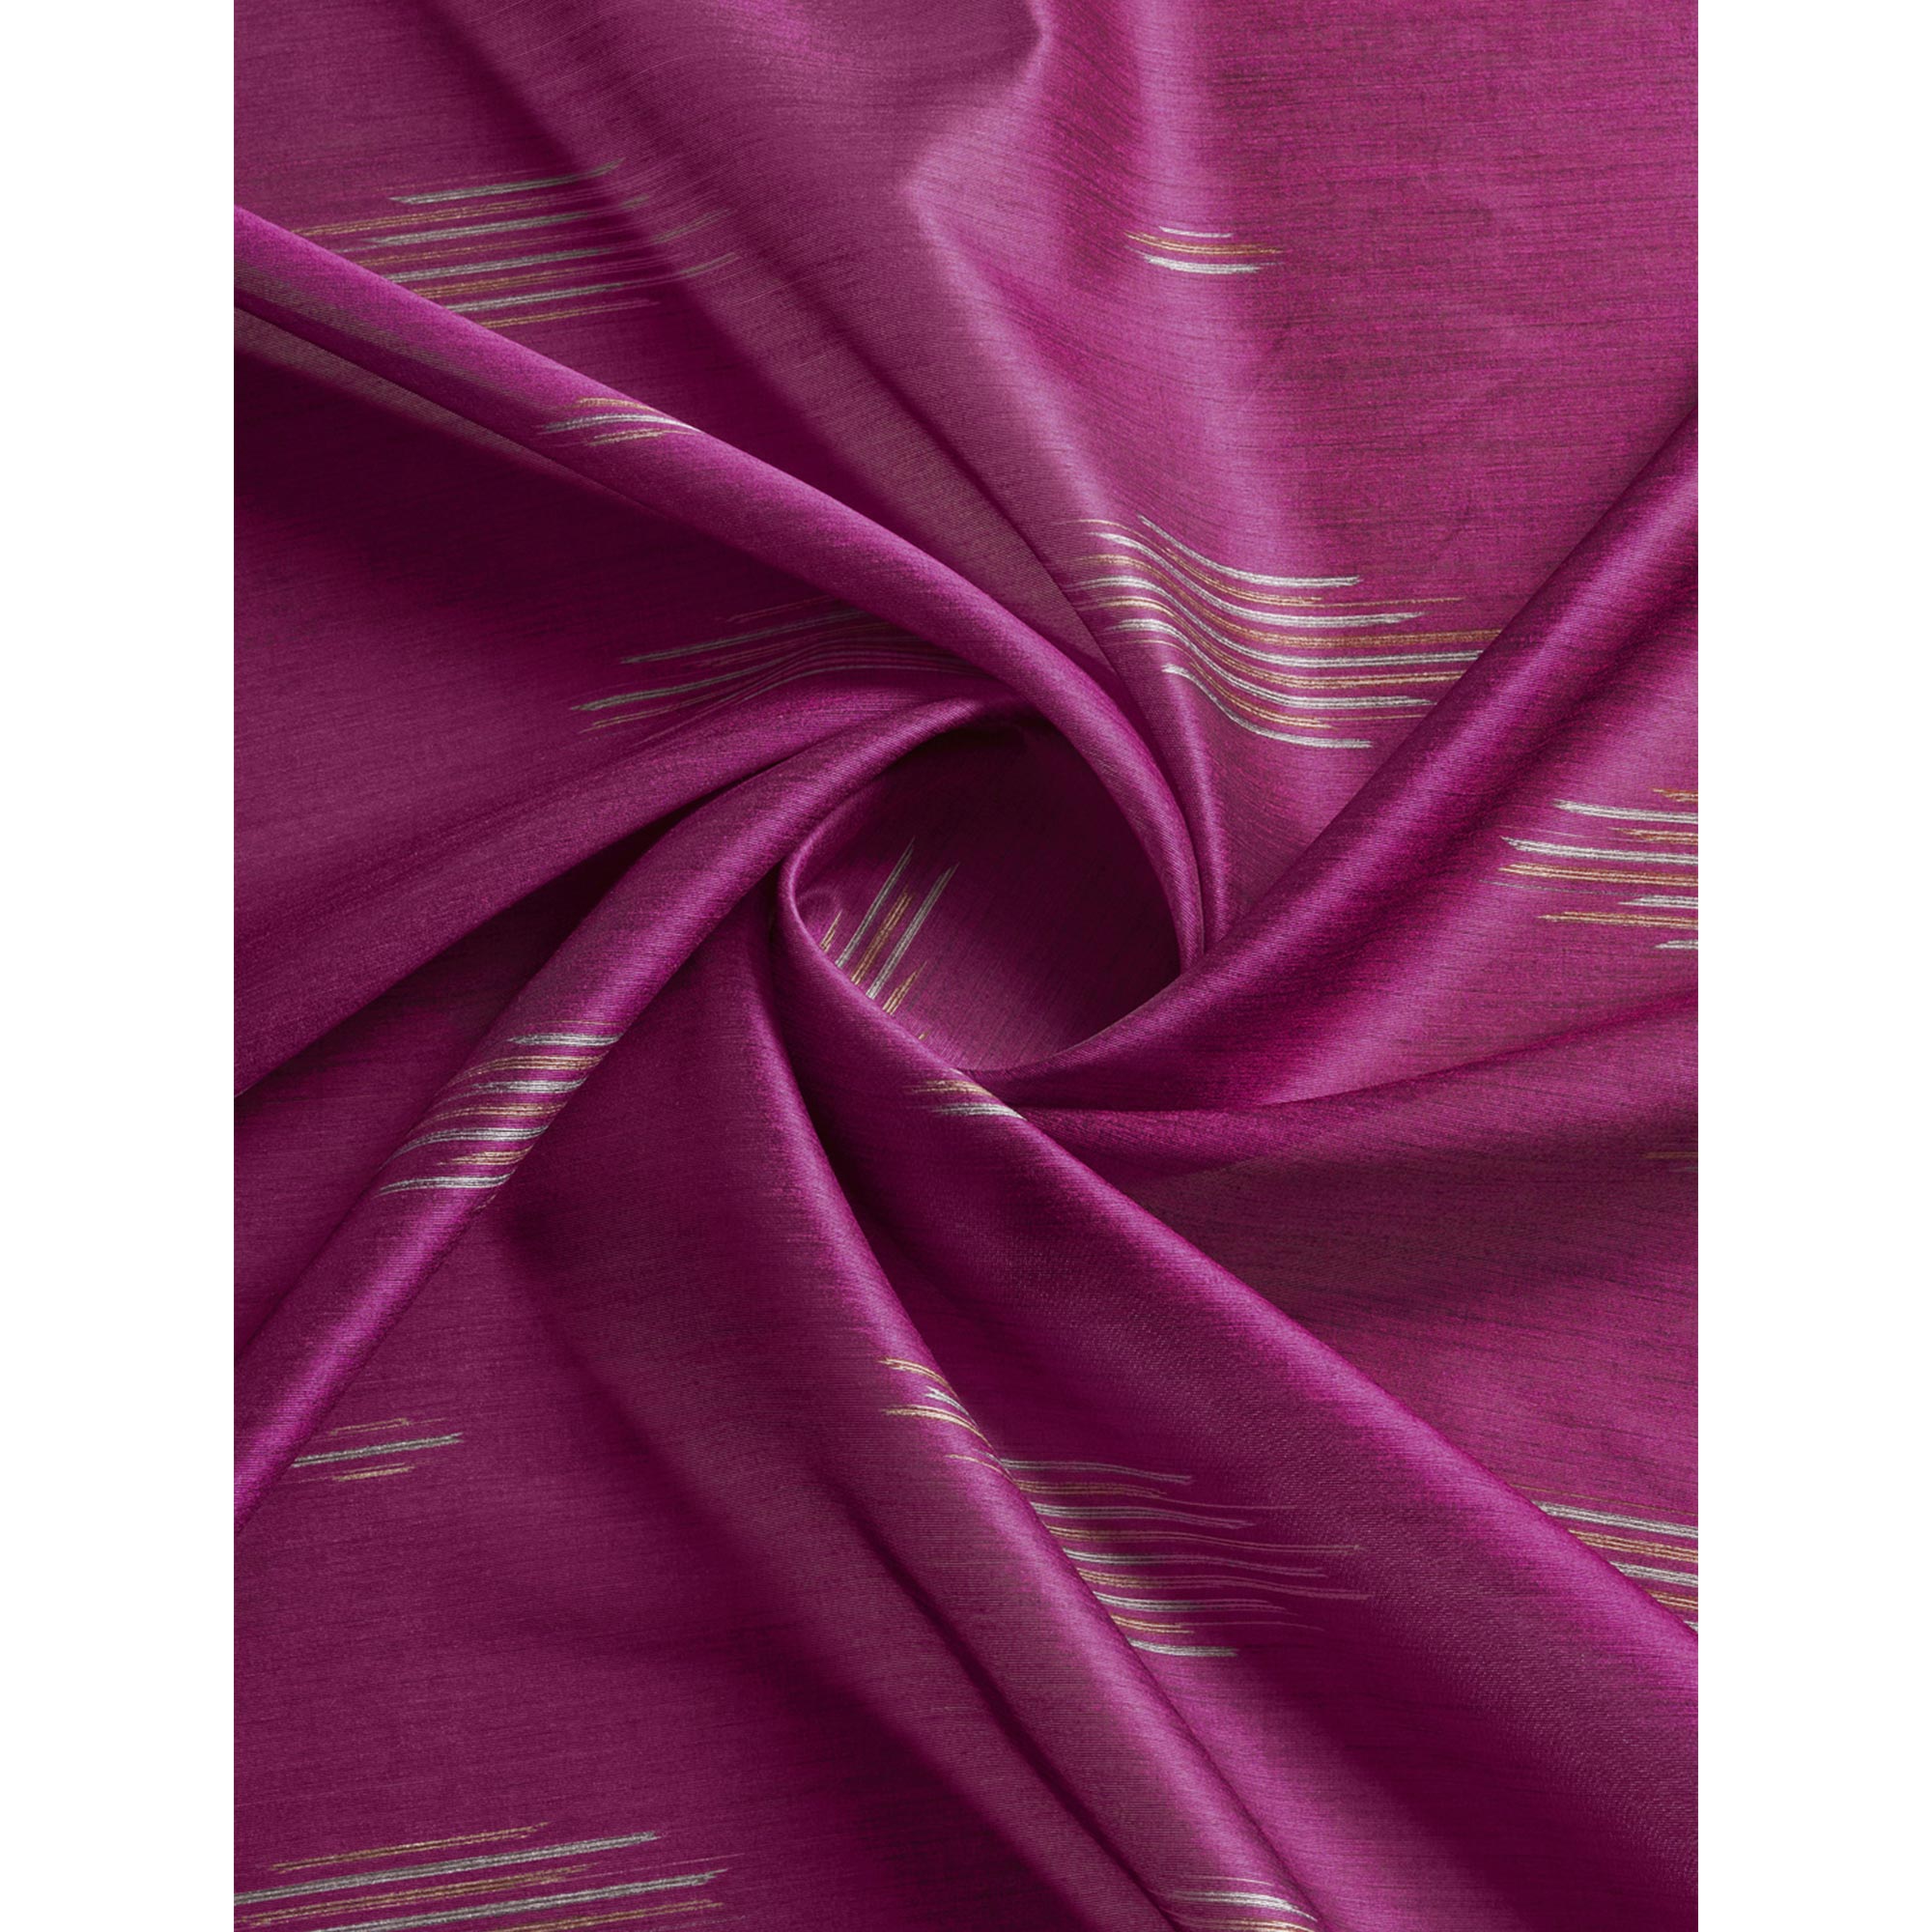 Rani Pink Digital Printed Bhagalpuri Silk Saree With Tassels